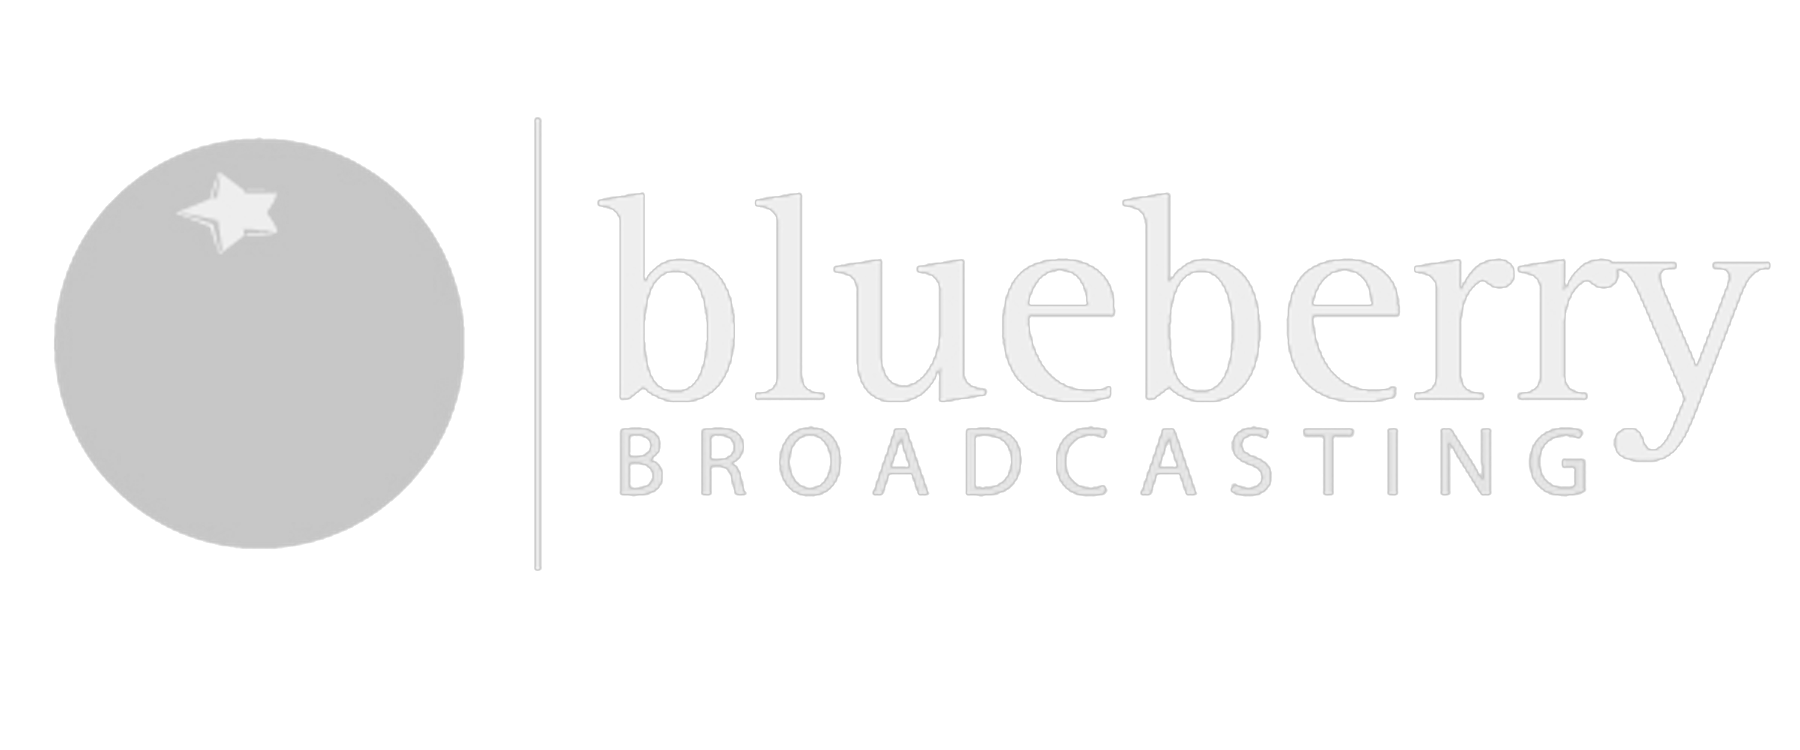 175 Blueberry Broadcasting LLC